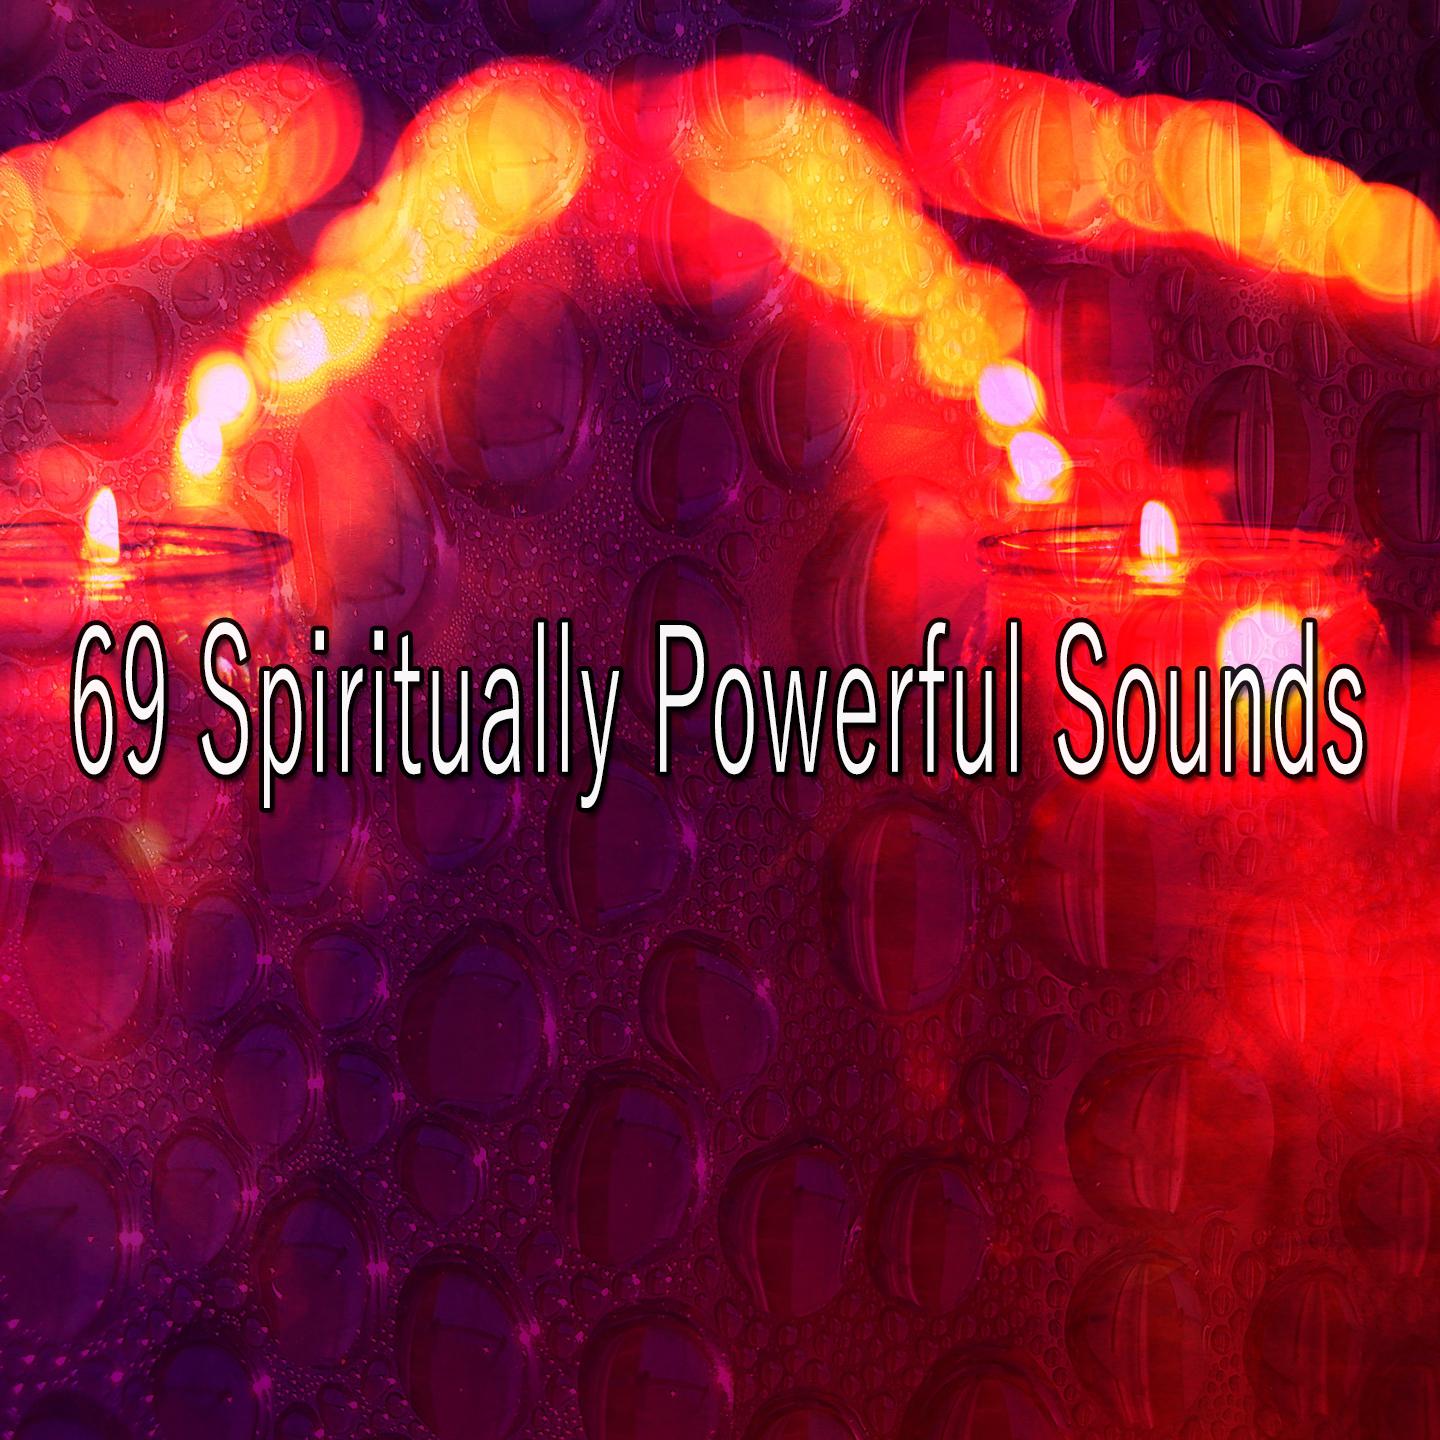 69 Spiritually Powerful Sounds